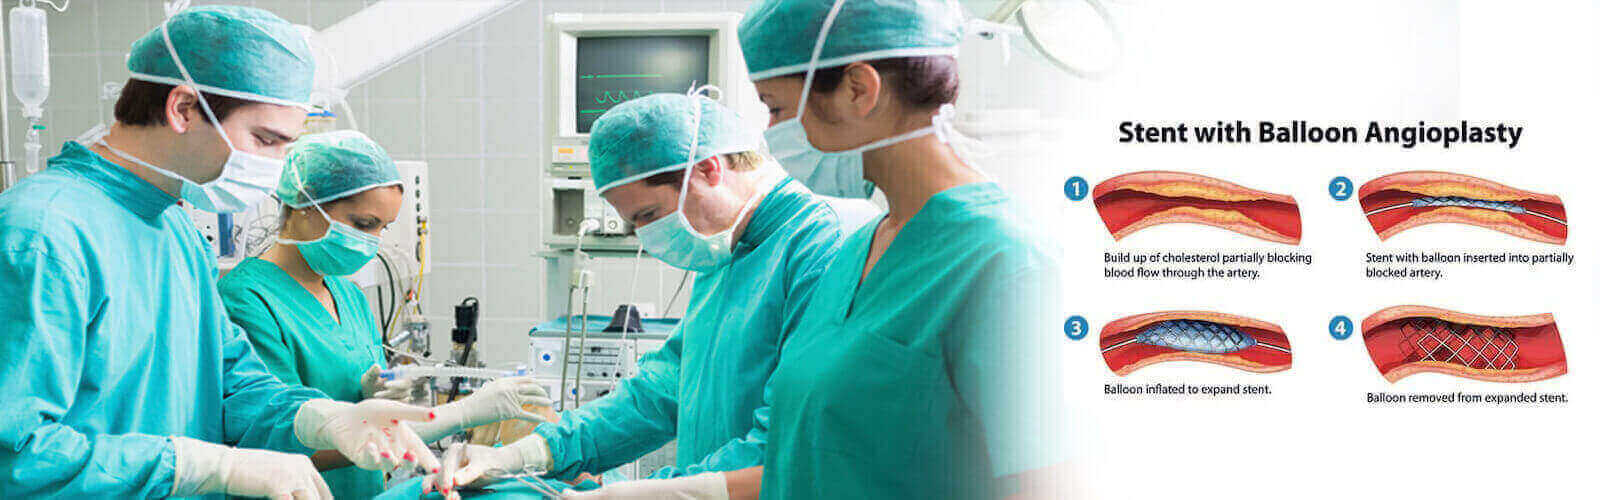 Angioplasty Surgery in Fiji